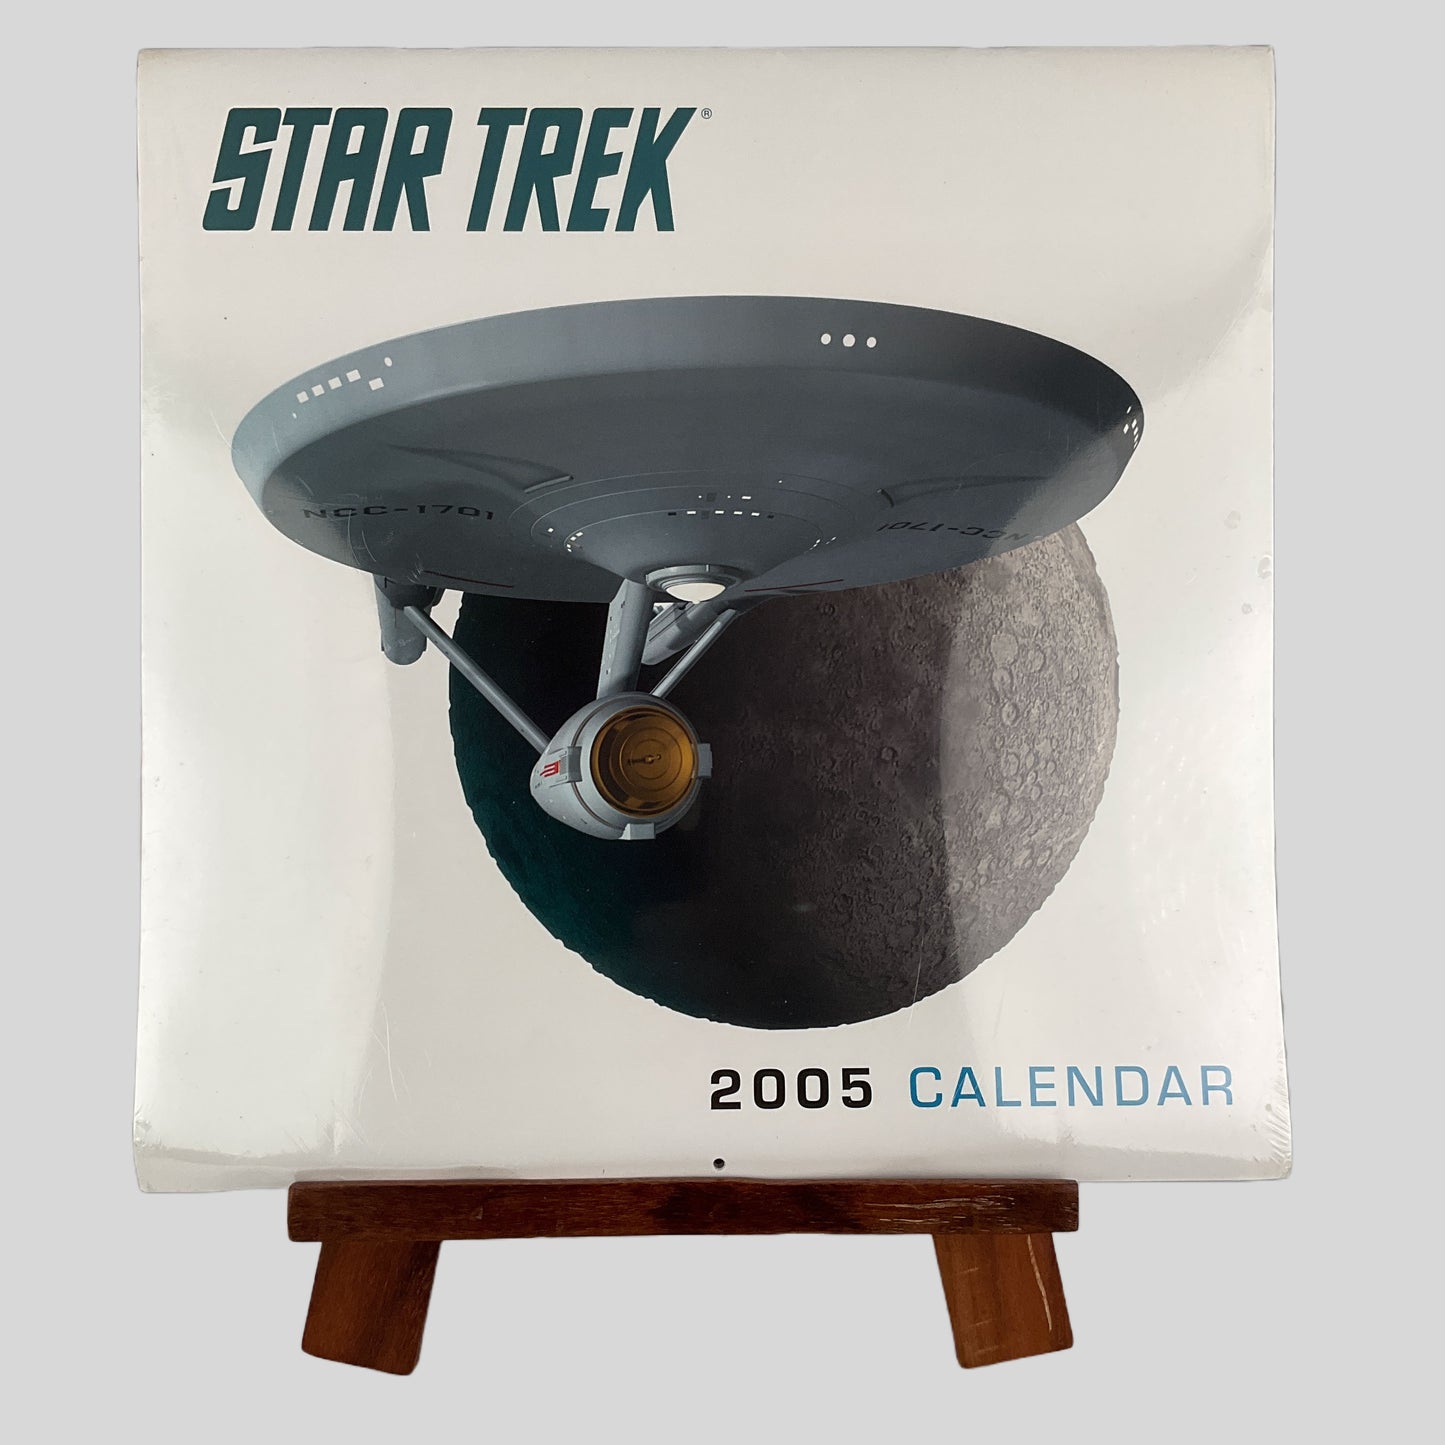 Simon & Schuester - Star Trek 2005 Calendar